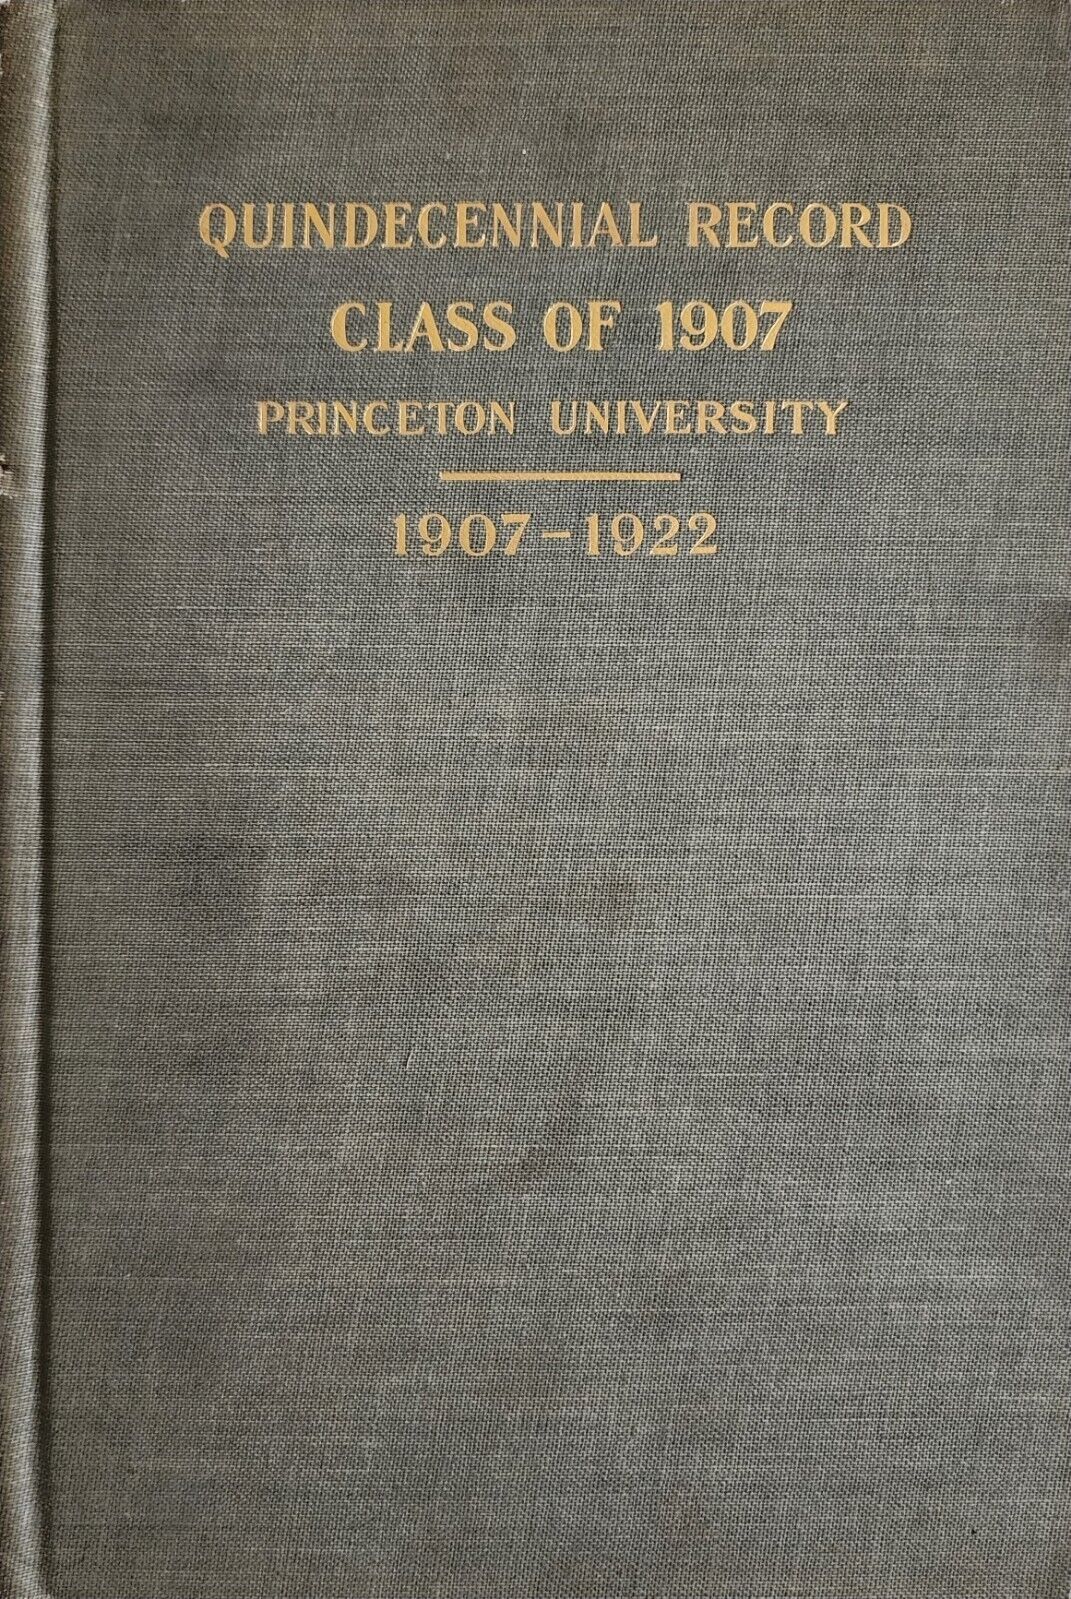 QUINDECENNIAL CLASS OF 1907 PRINCETON UNIVERSITY  1907-1922